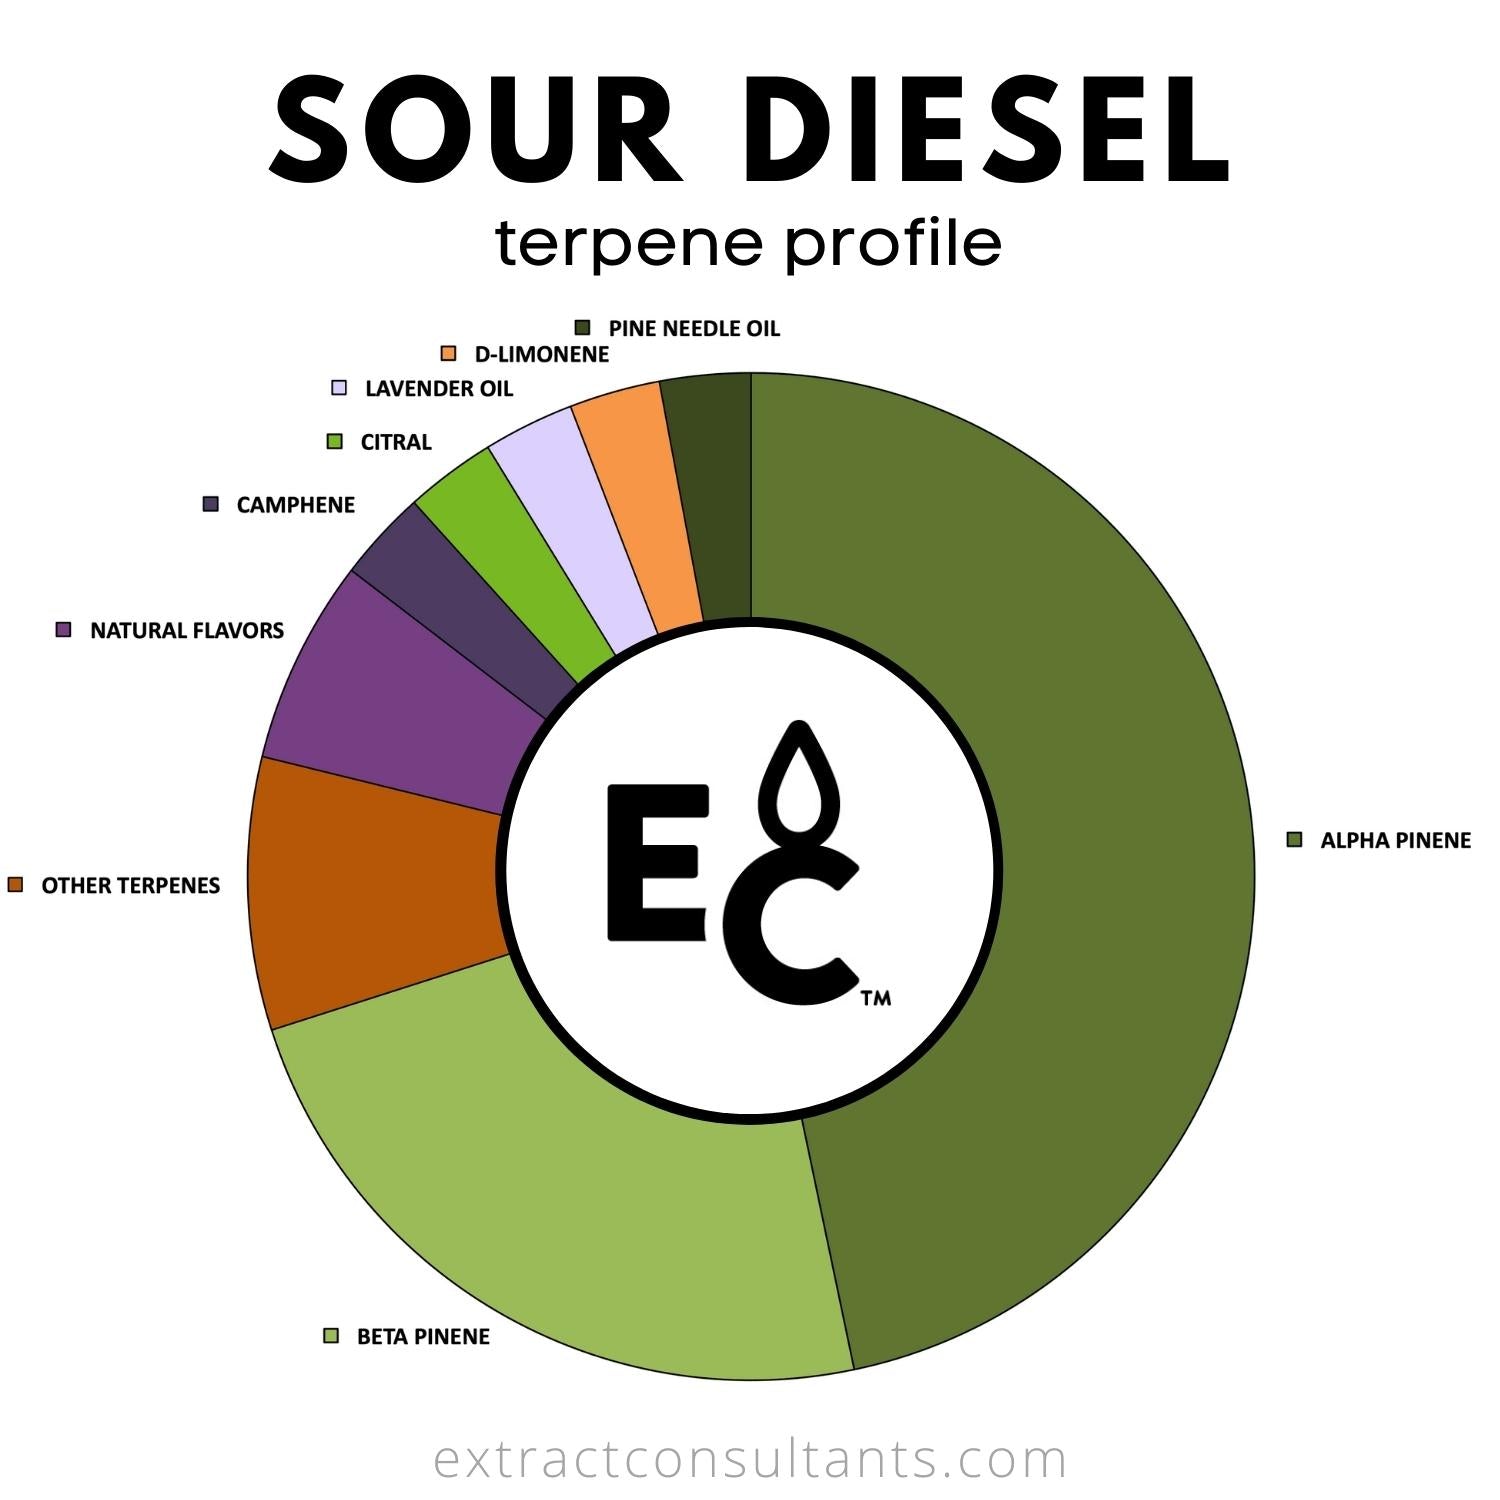 Sour D terpene profile